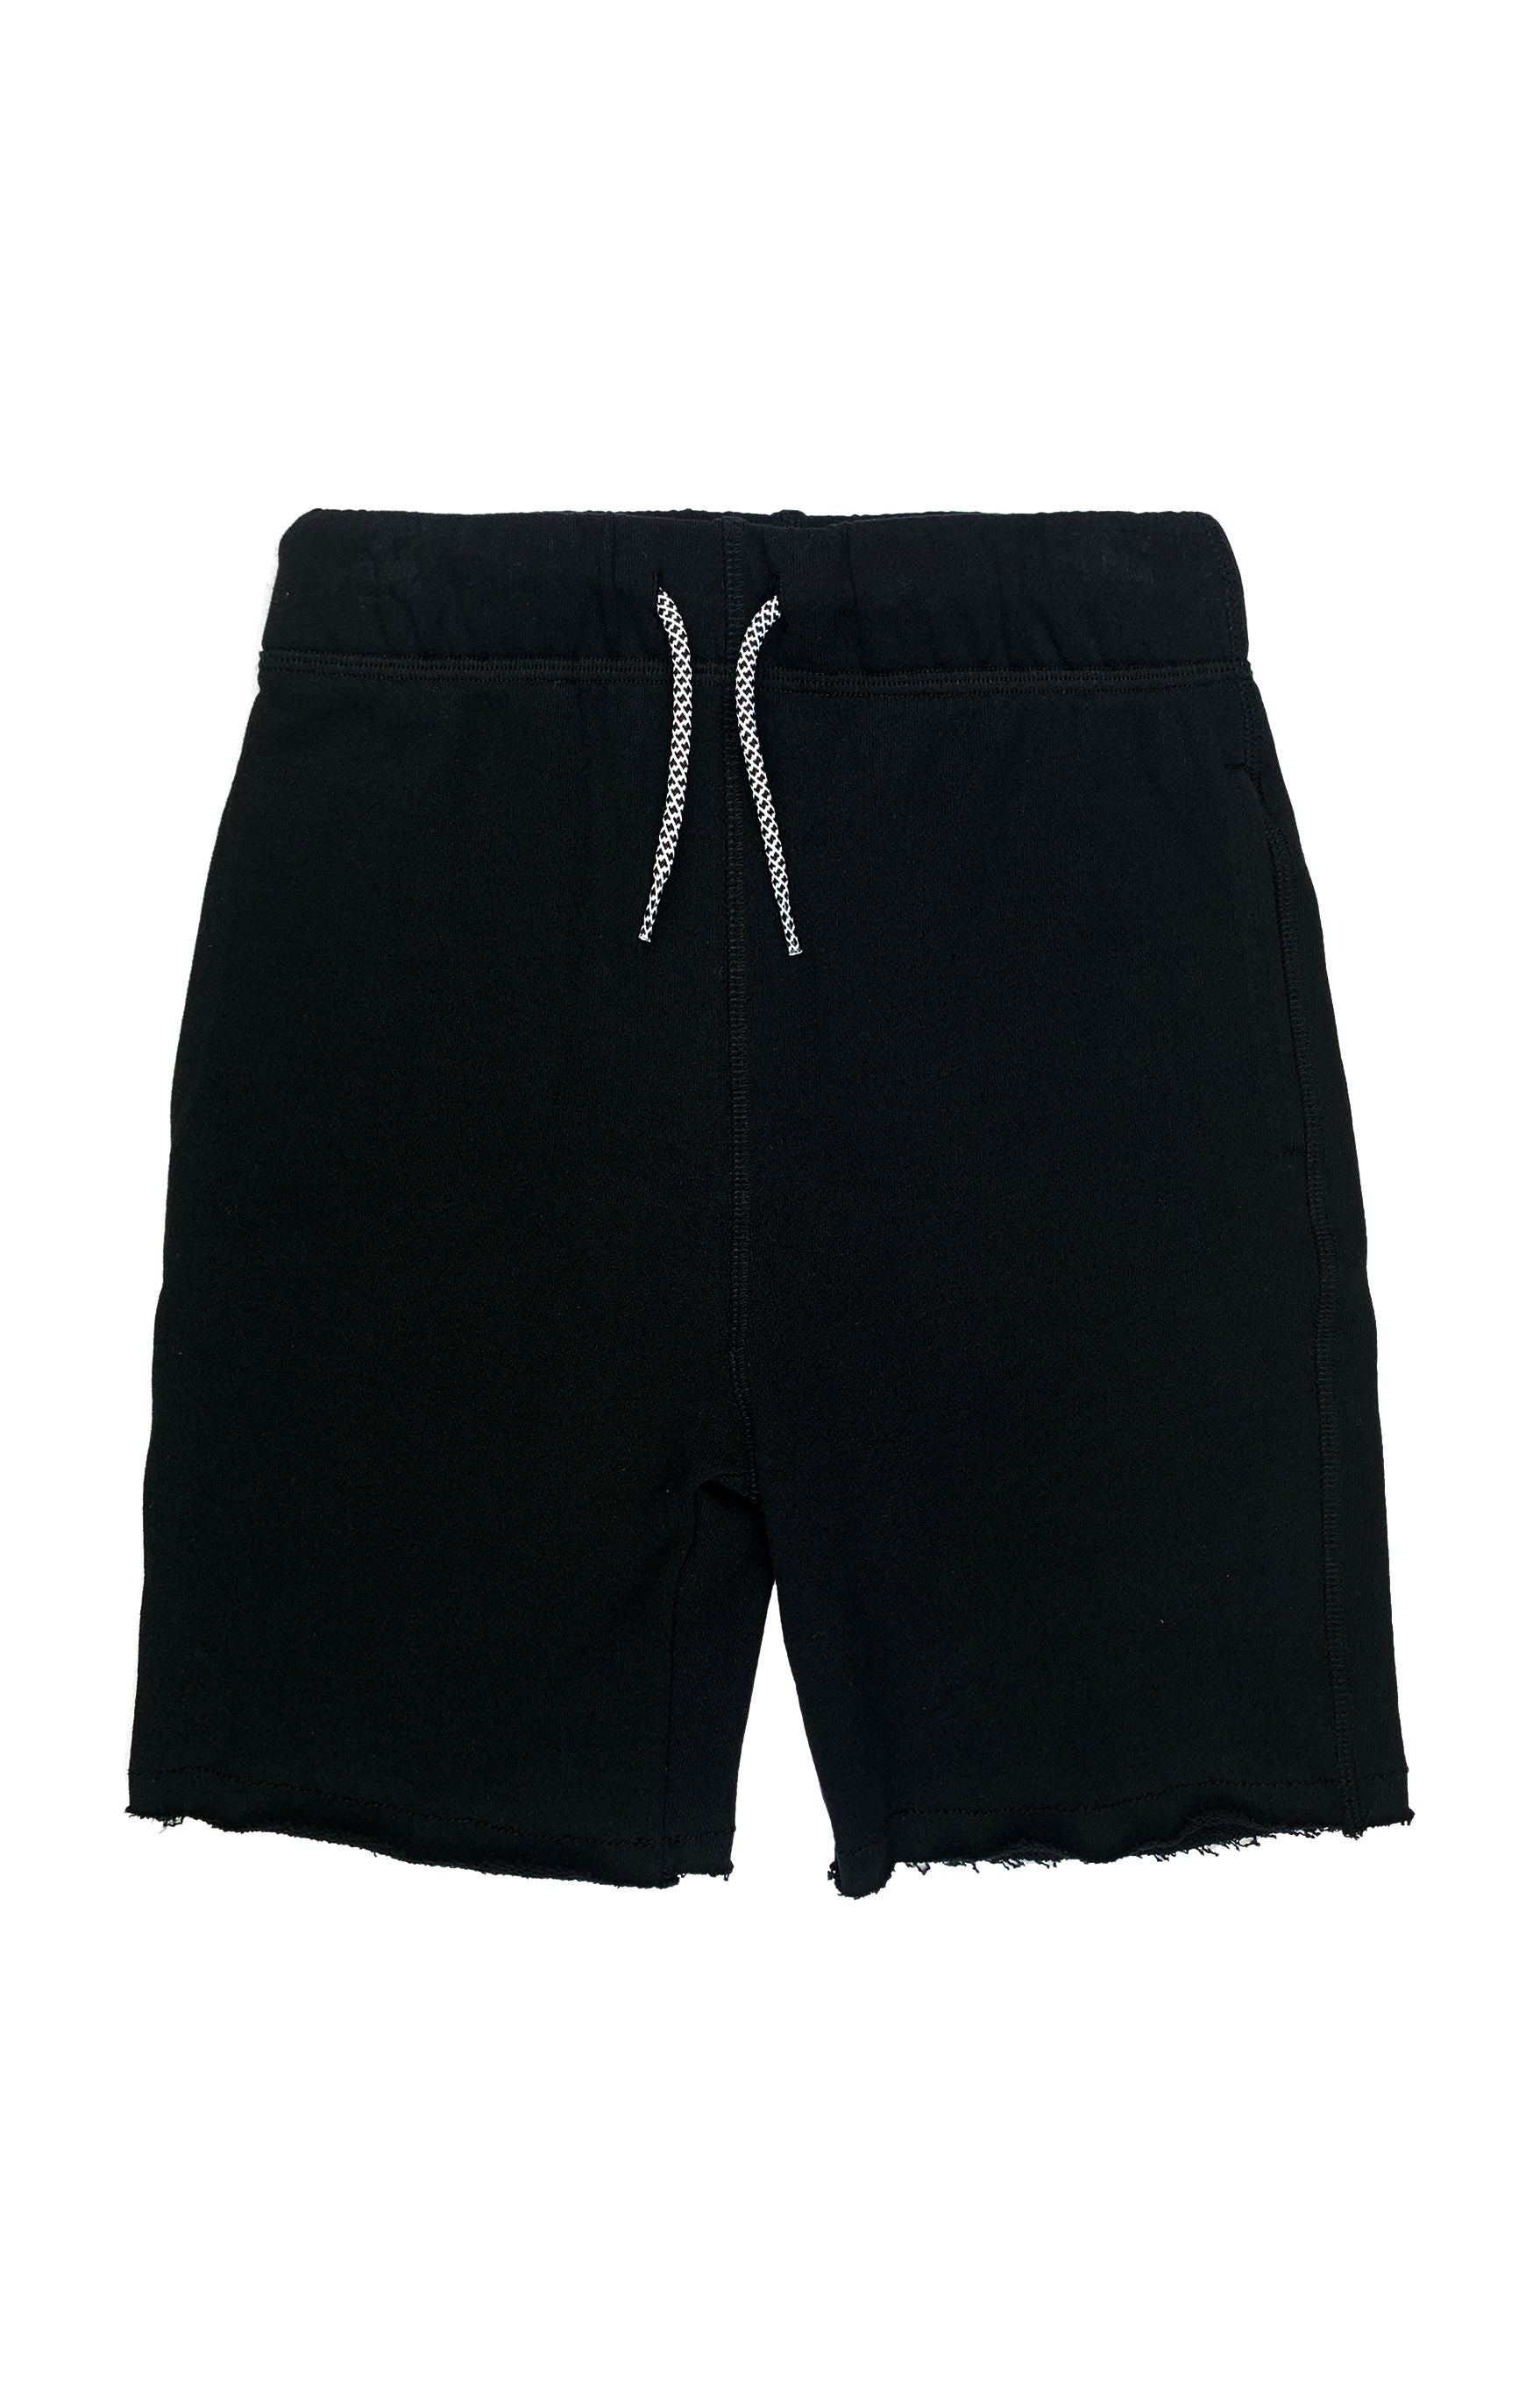 Appaman black sweat shorts for boys